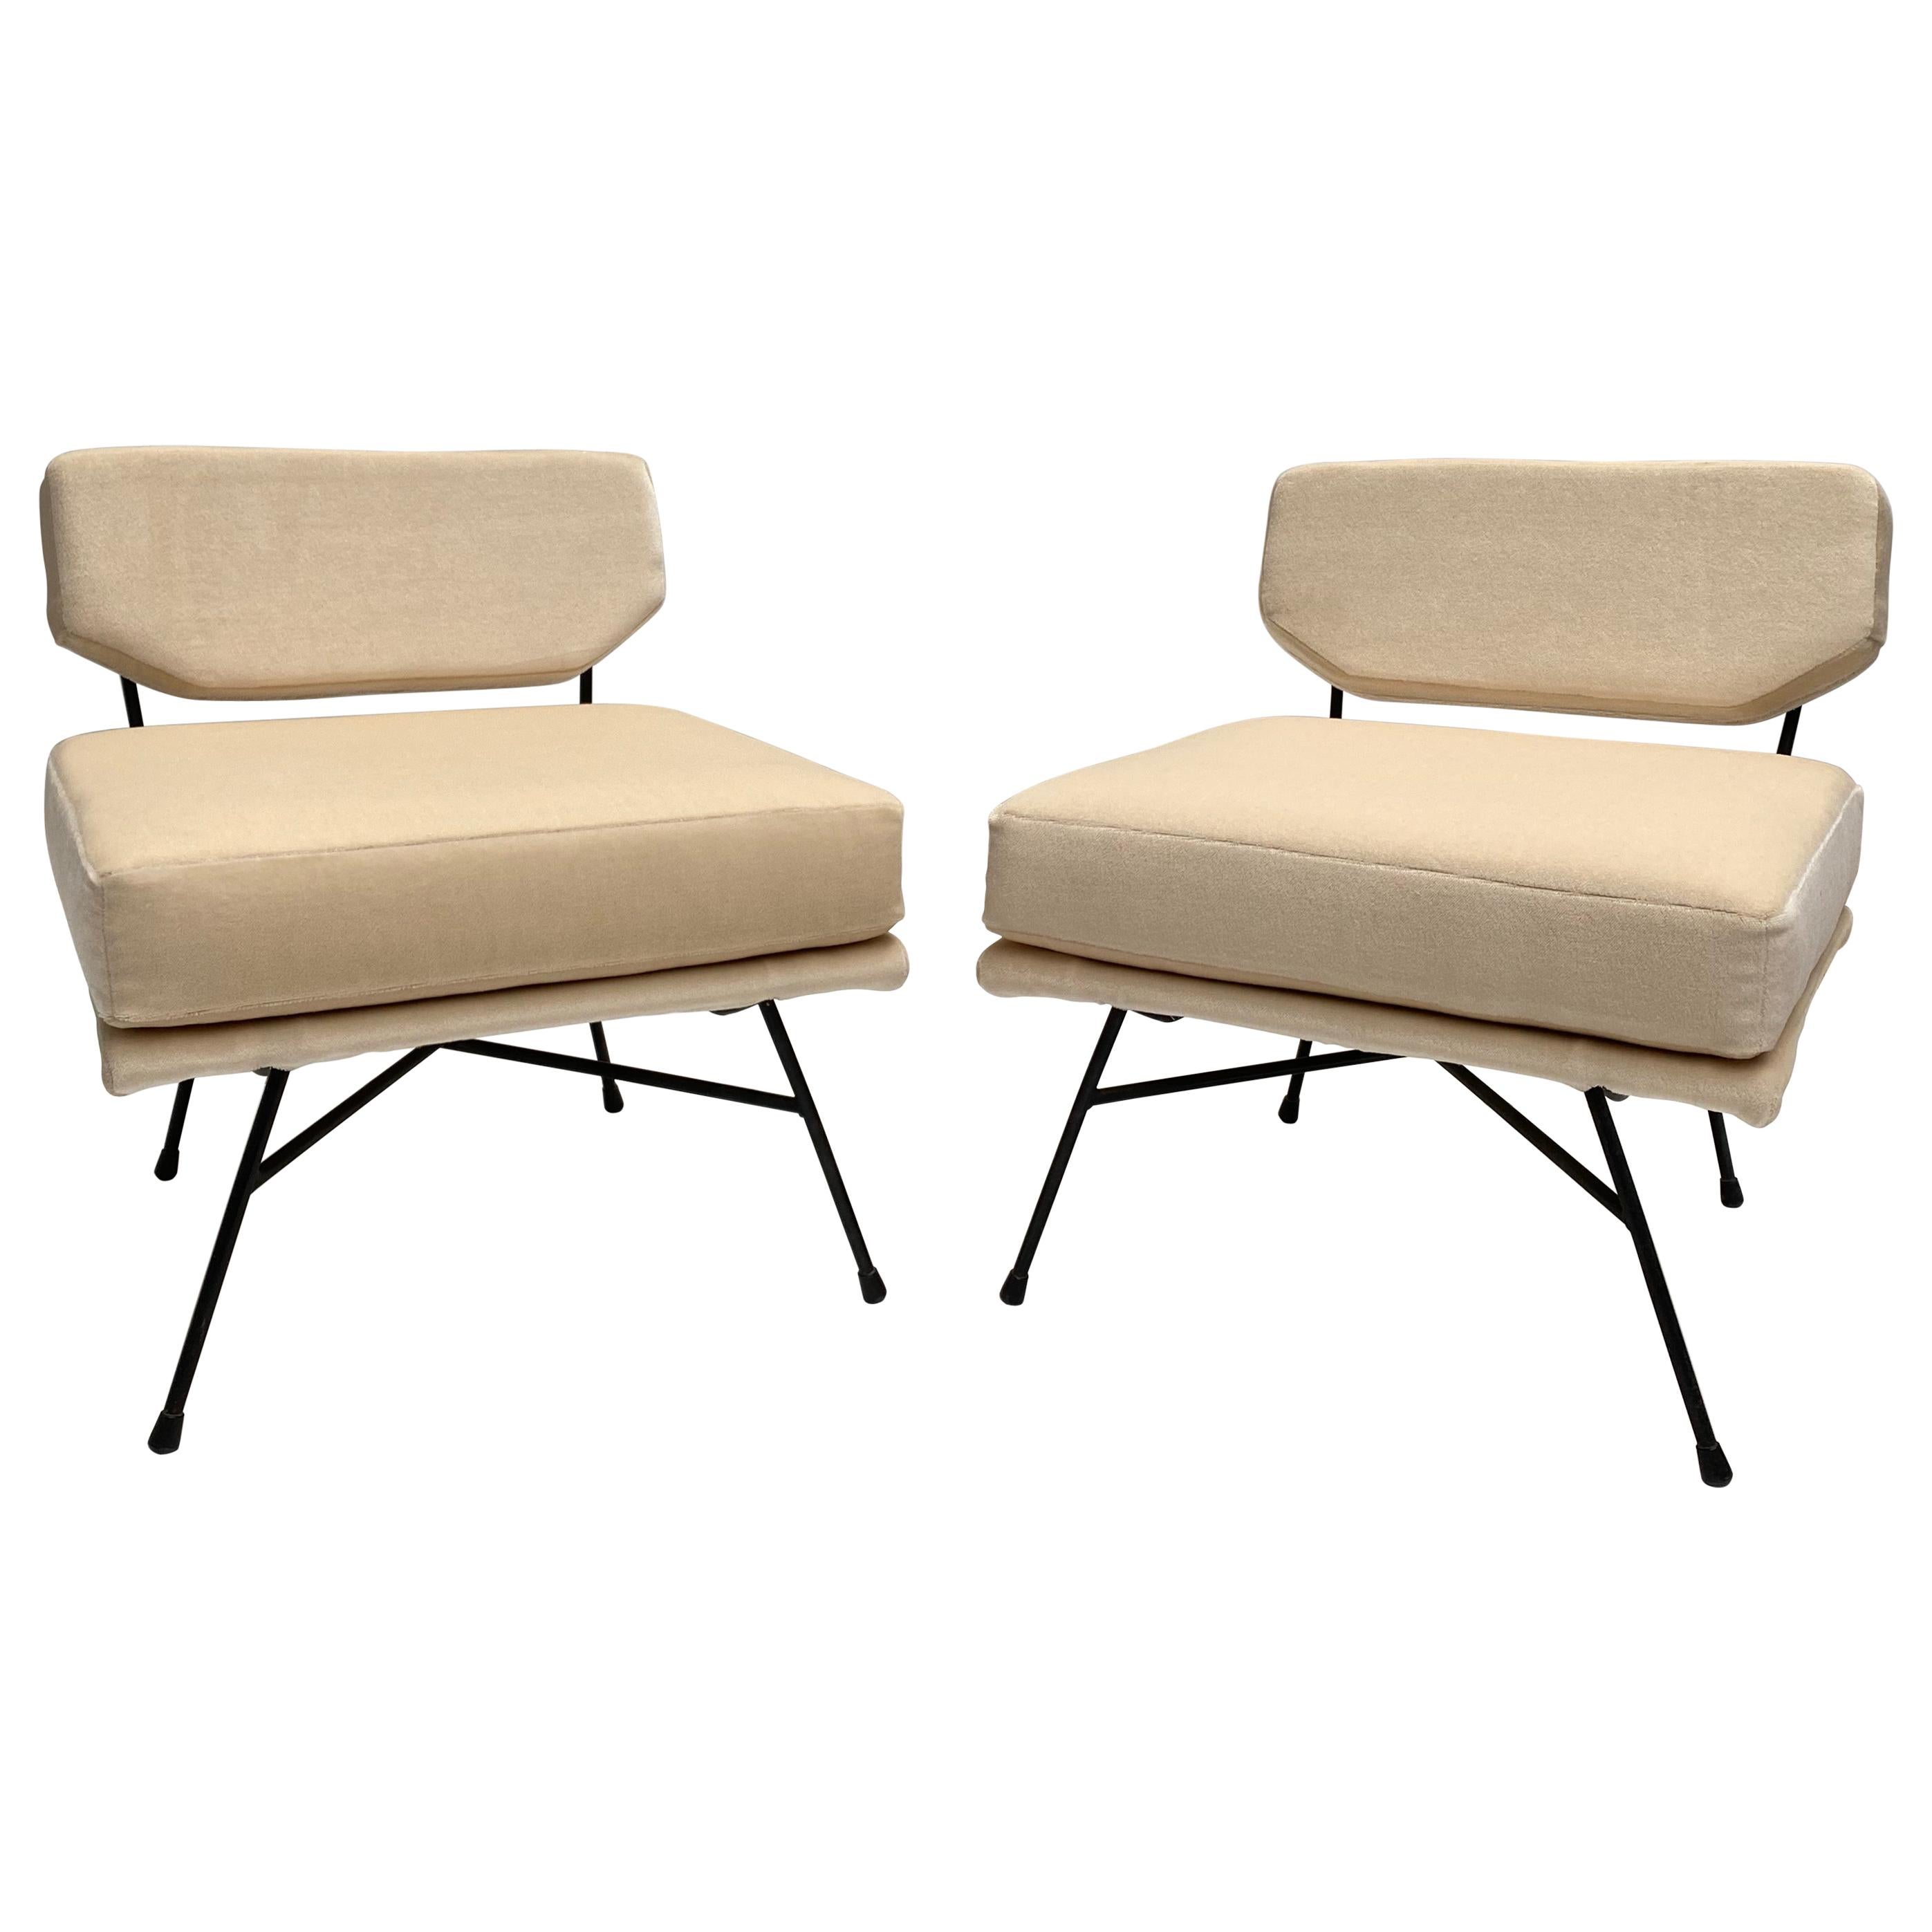 Studio BBPR Lounge Chairs